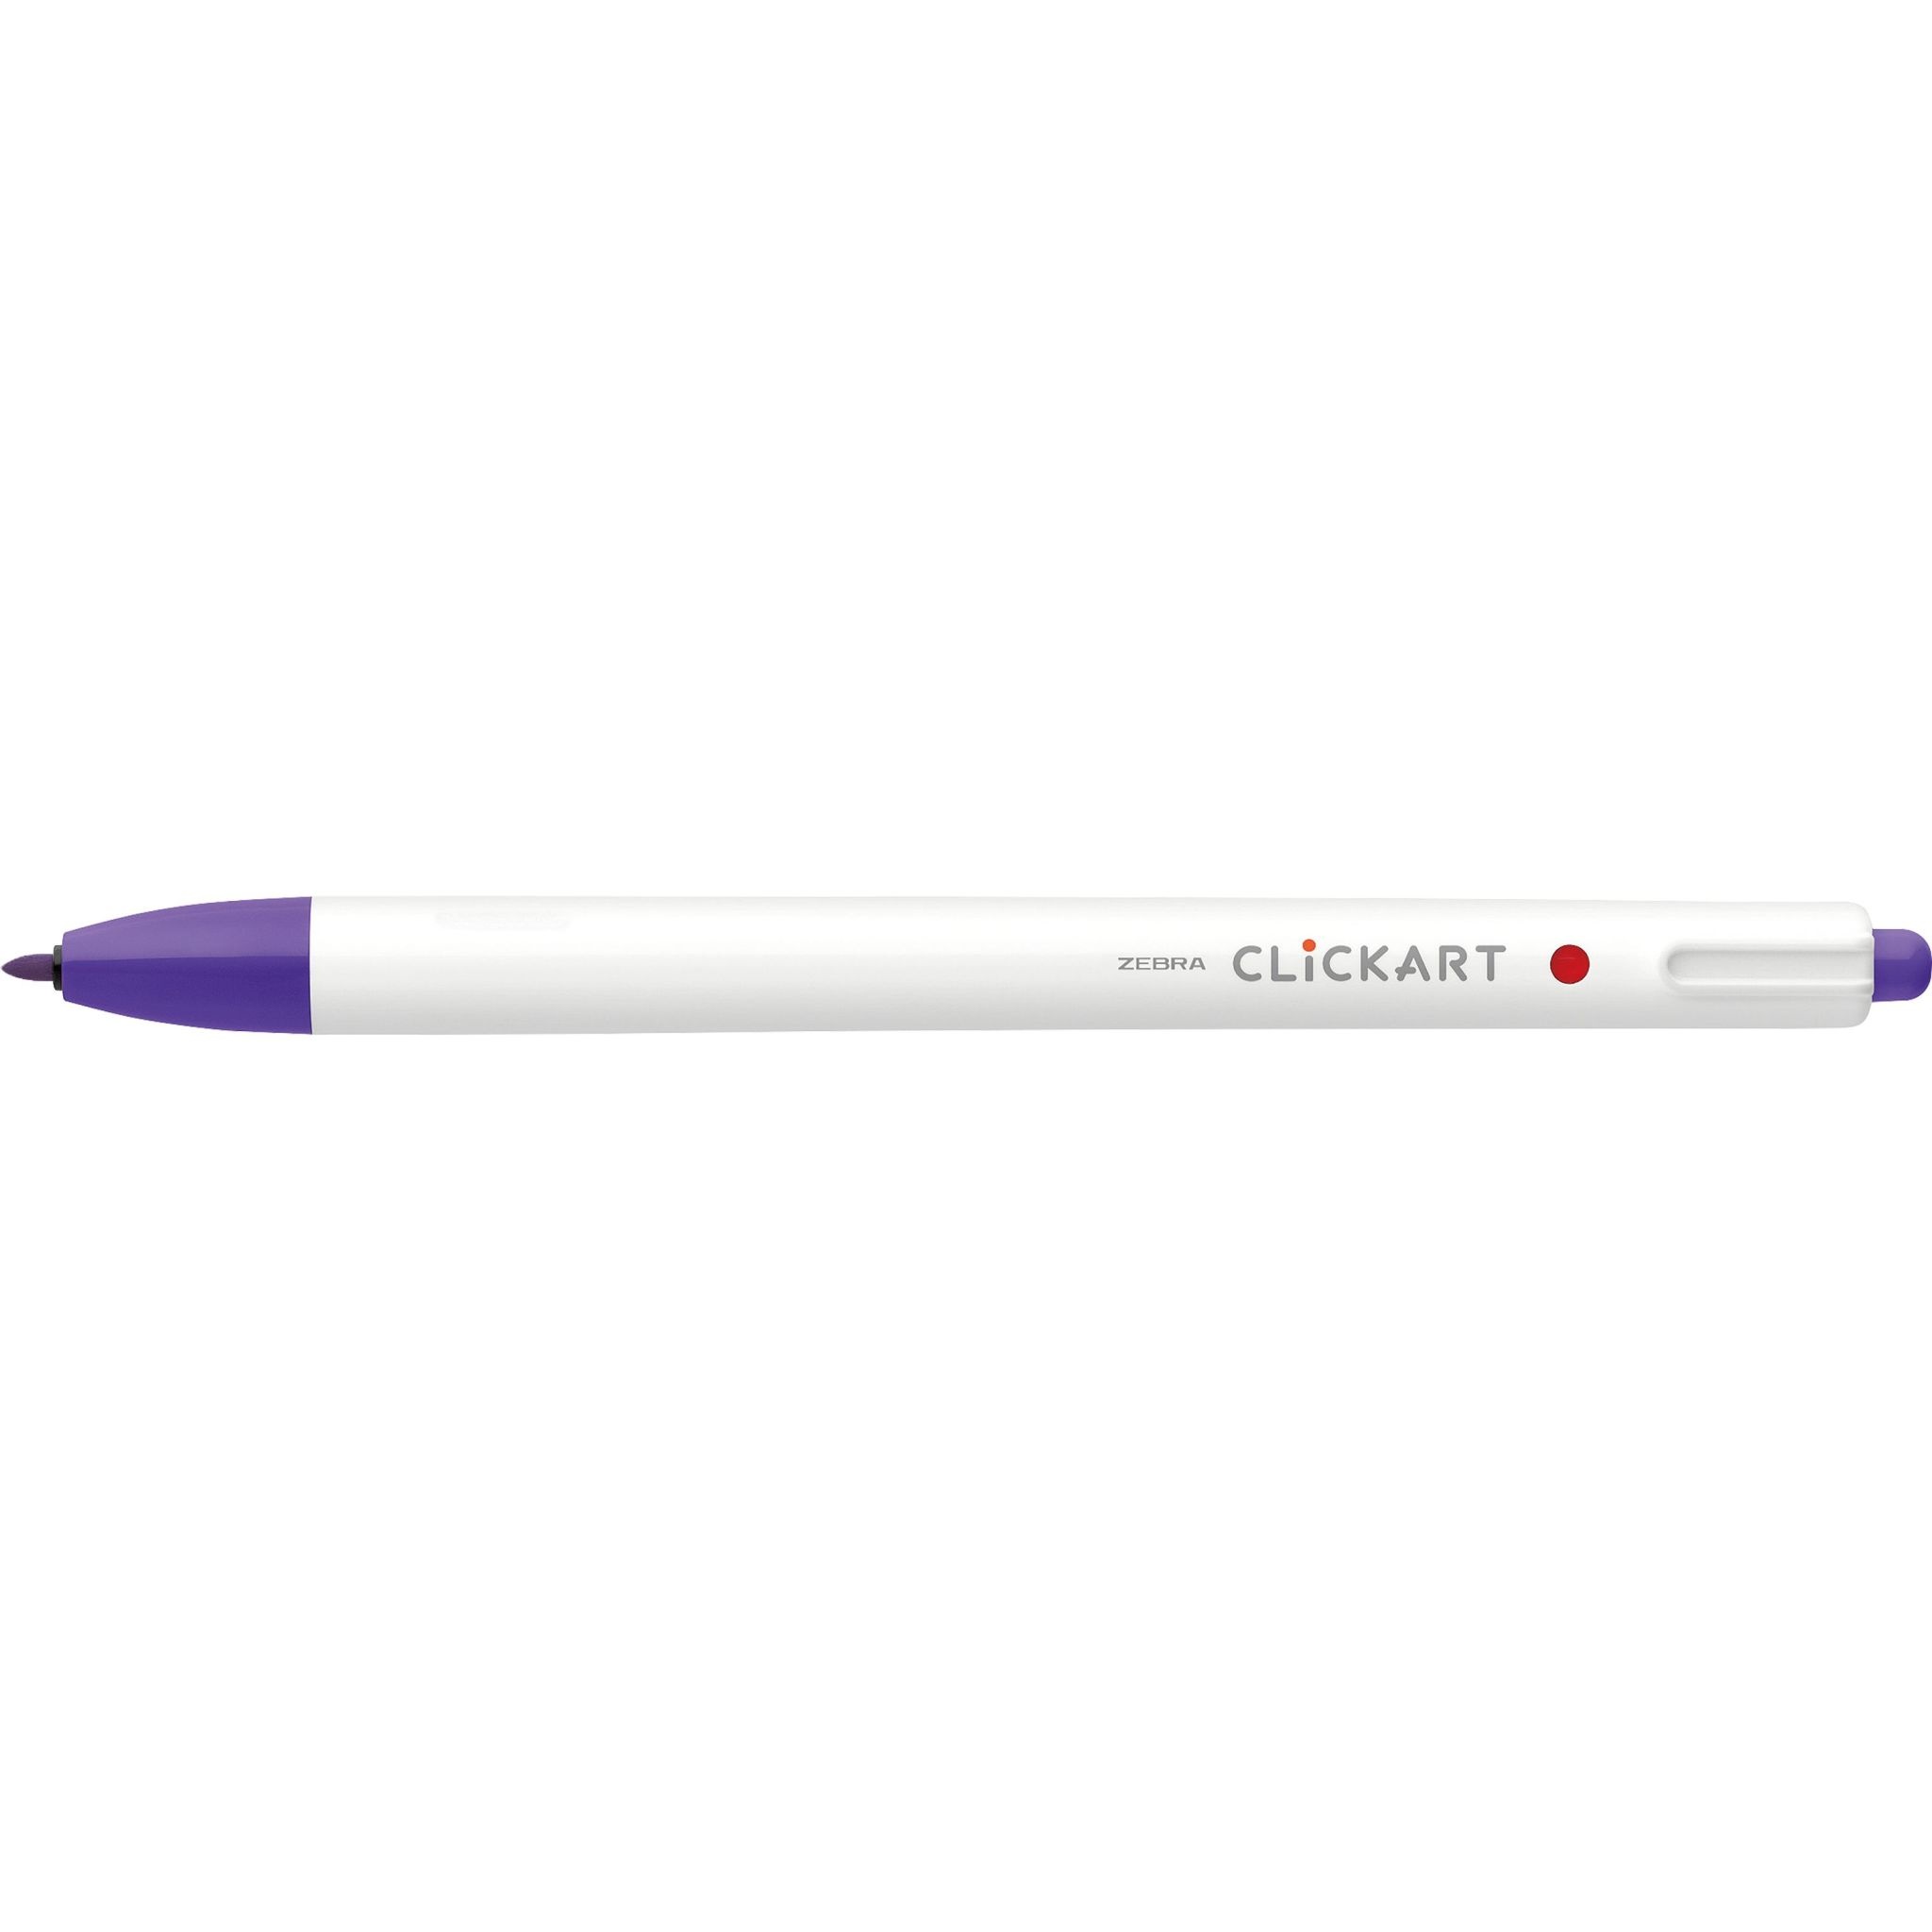 https://cdn.shoplightspeed.com/shops/636894/files/54752150/zebra-clickart-retractable-marker-pen-purple-f.jpg